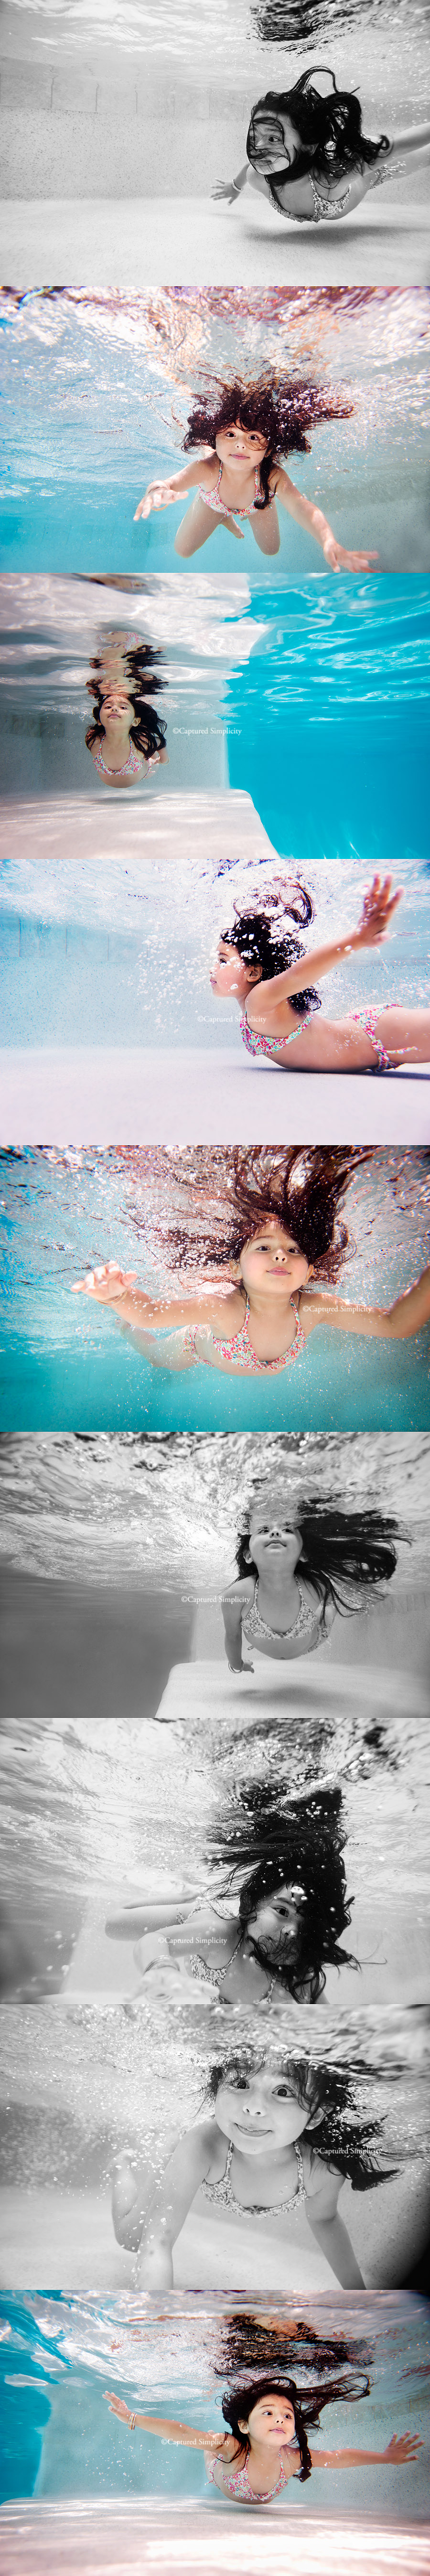 Underwater Child Photography Houston